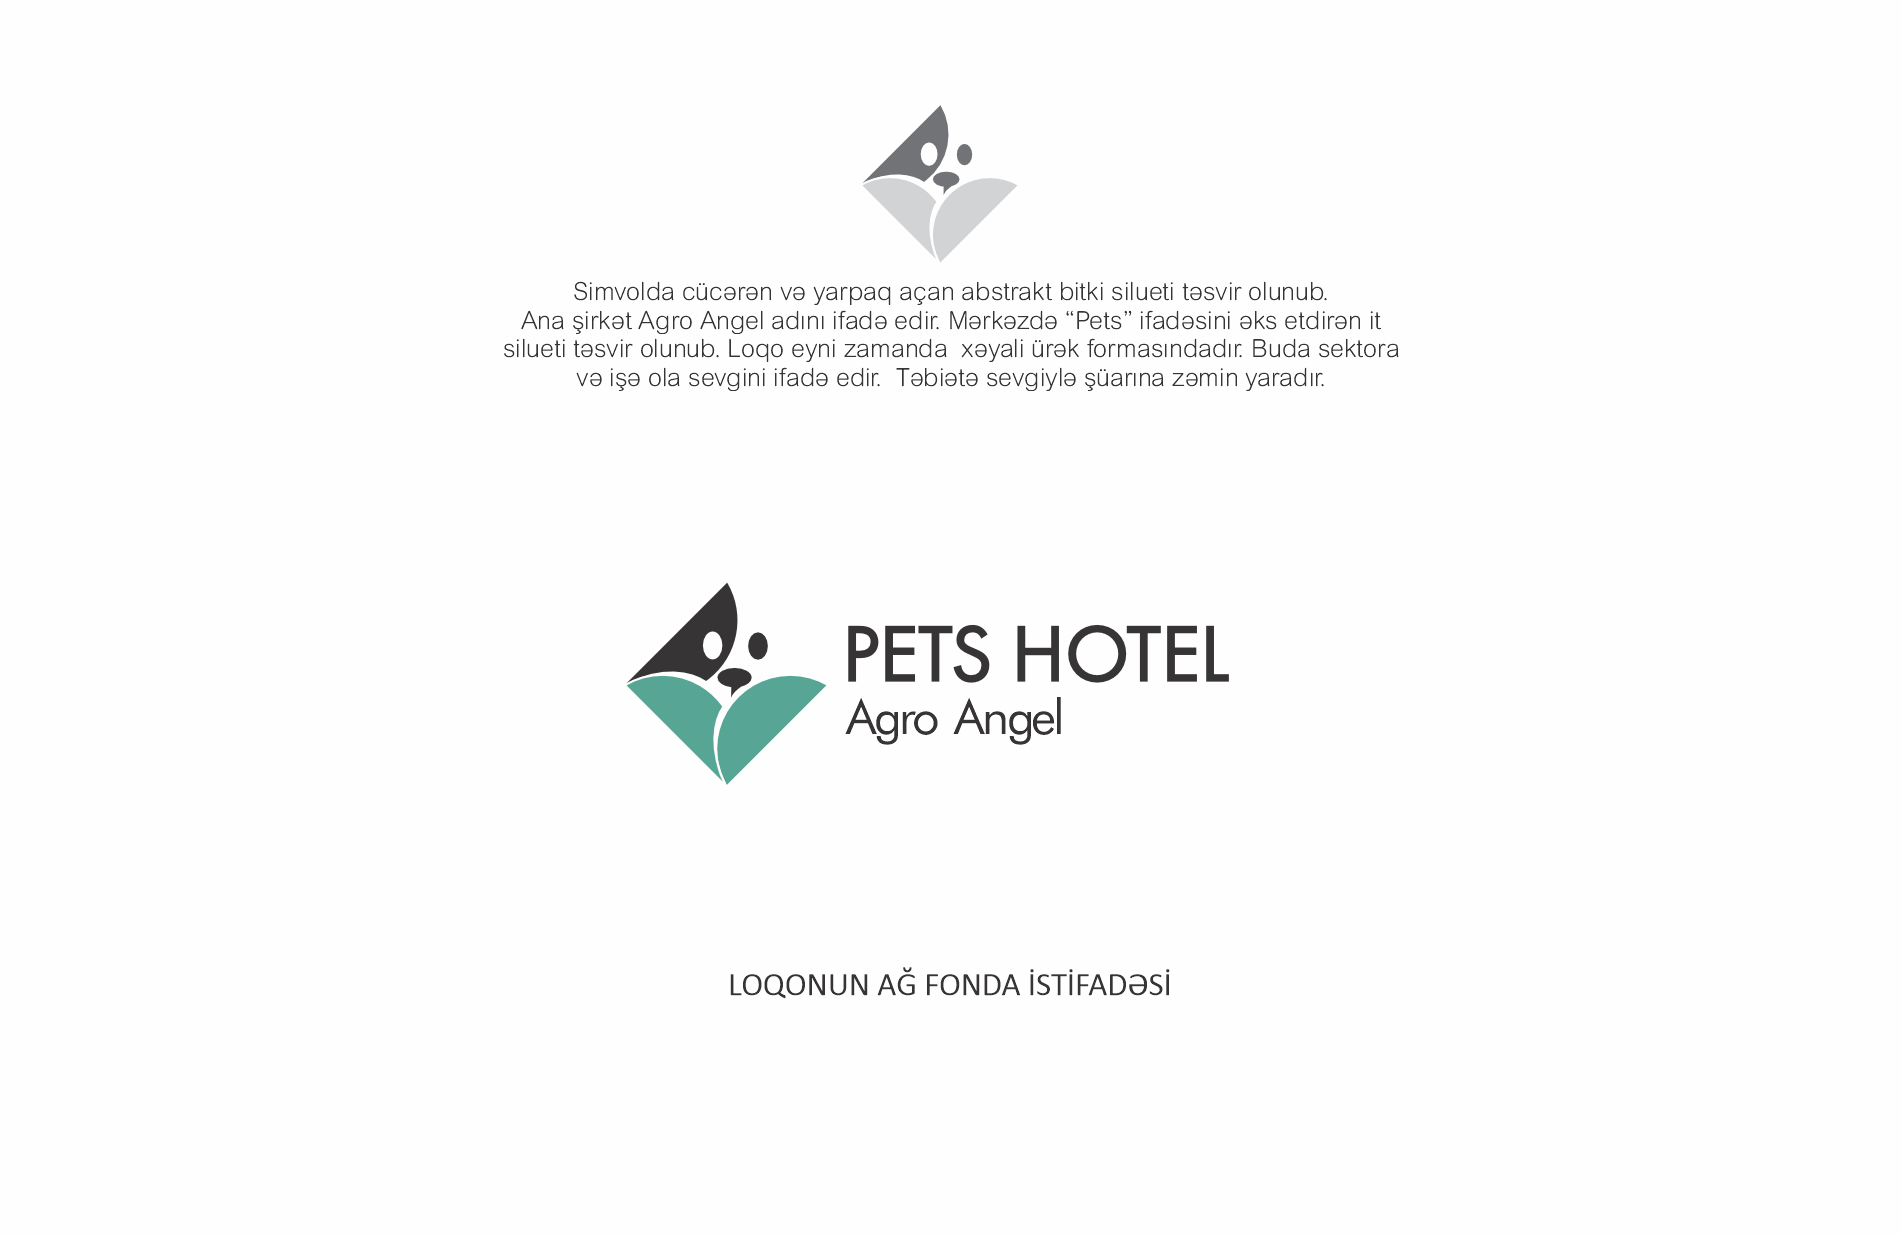 Pets hotel